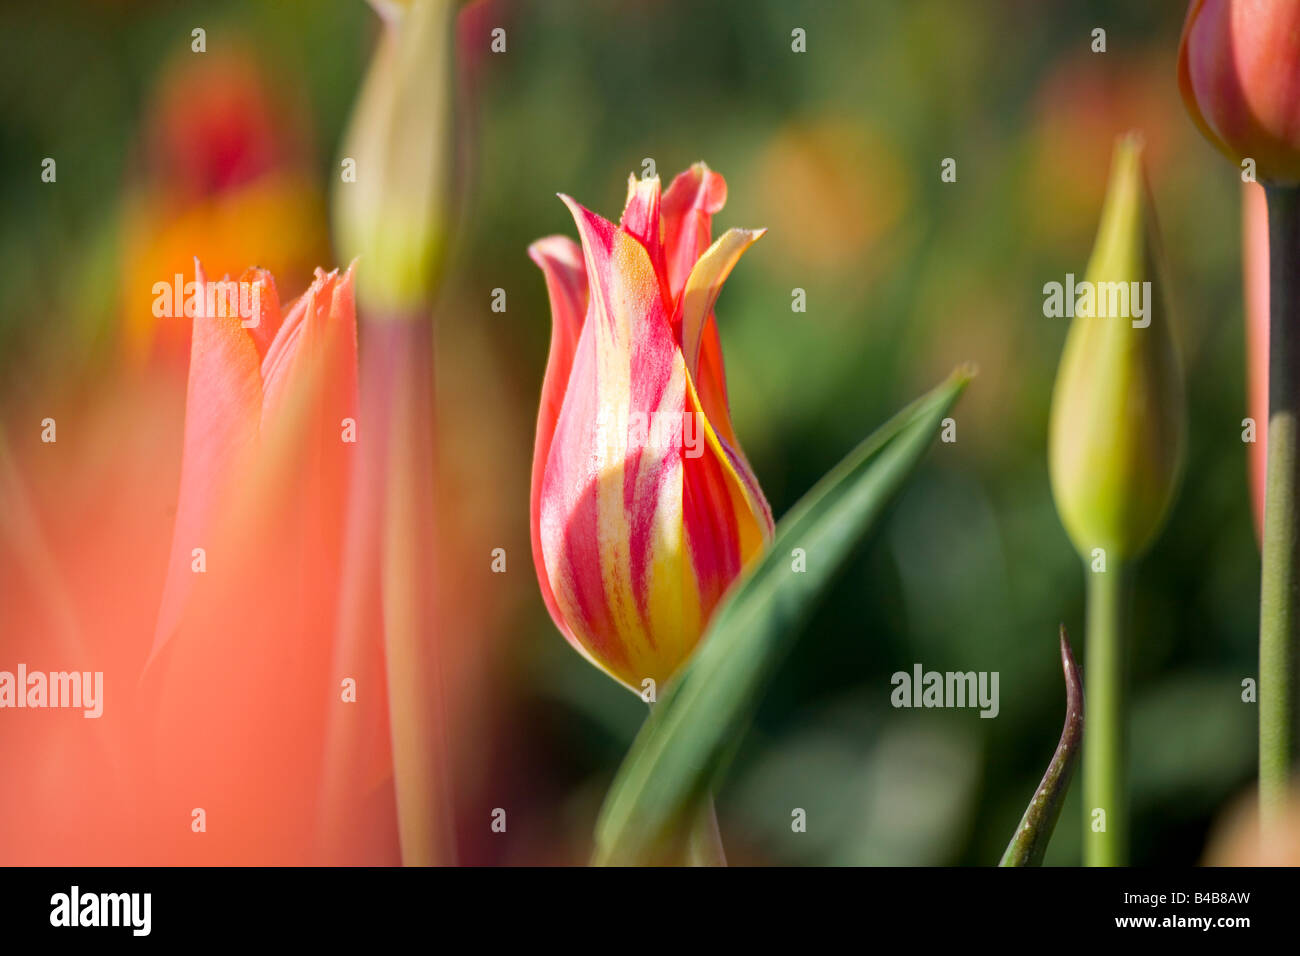 Tulips in bloom Stock Photo